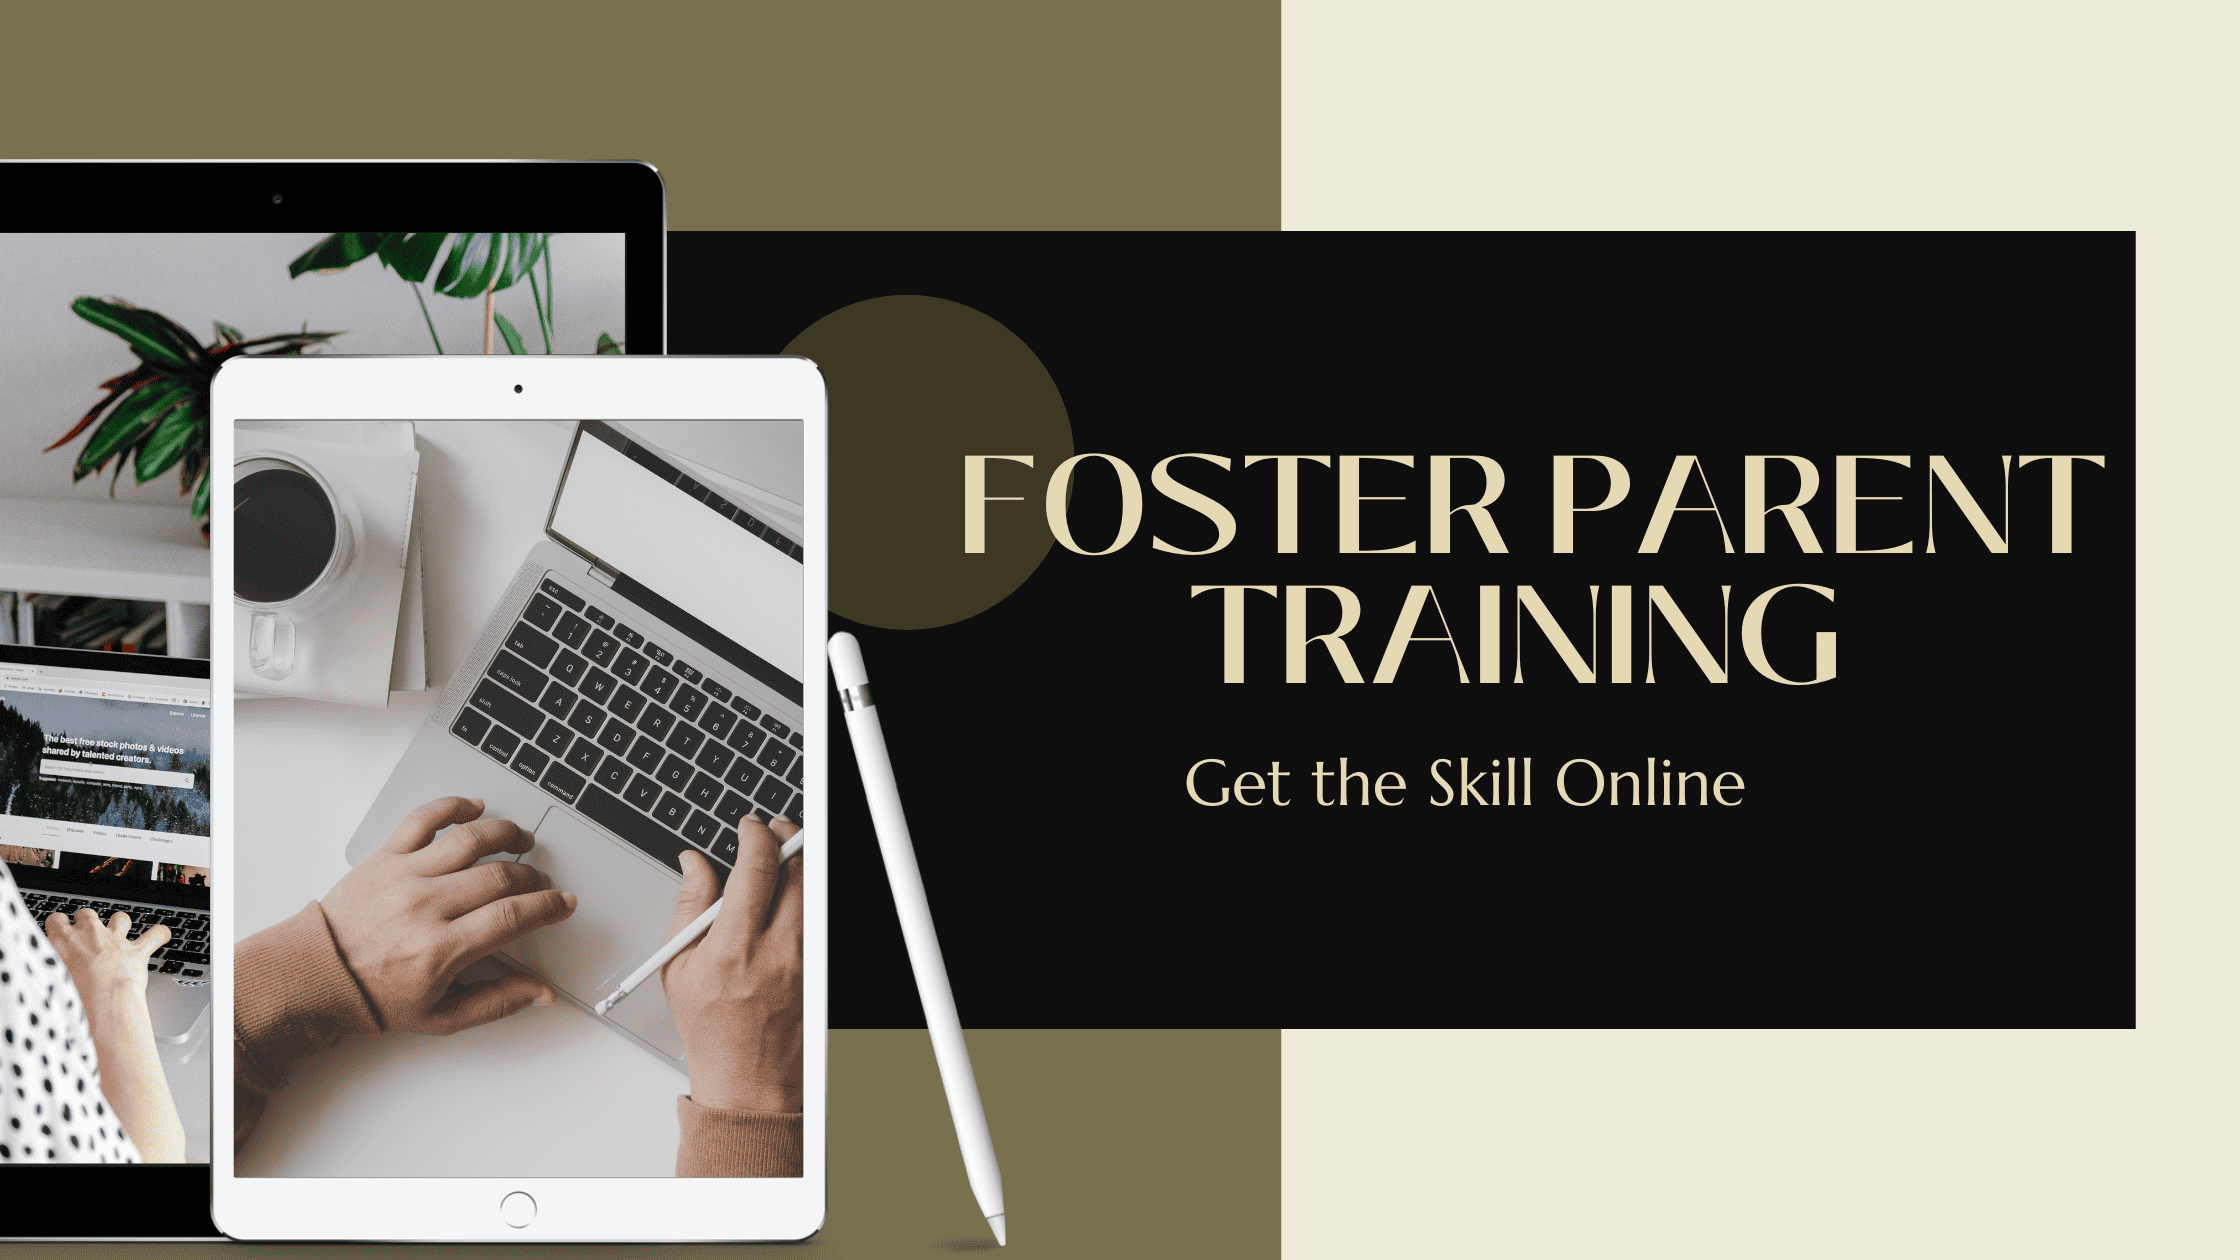 Free Online Foster Parent Training With Certificate 4evernurturing